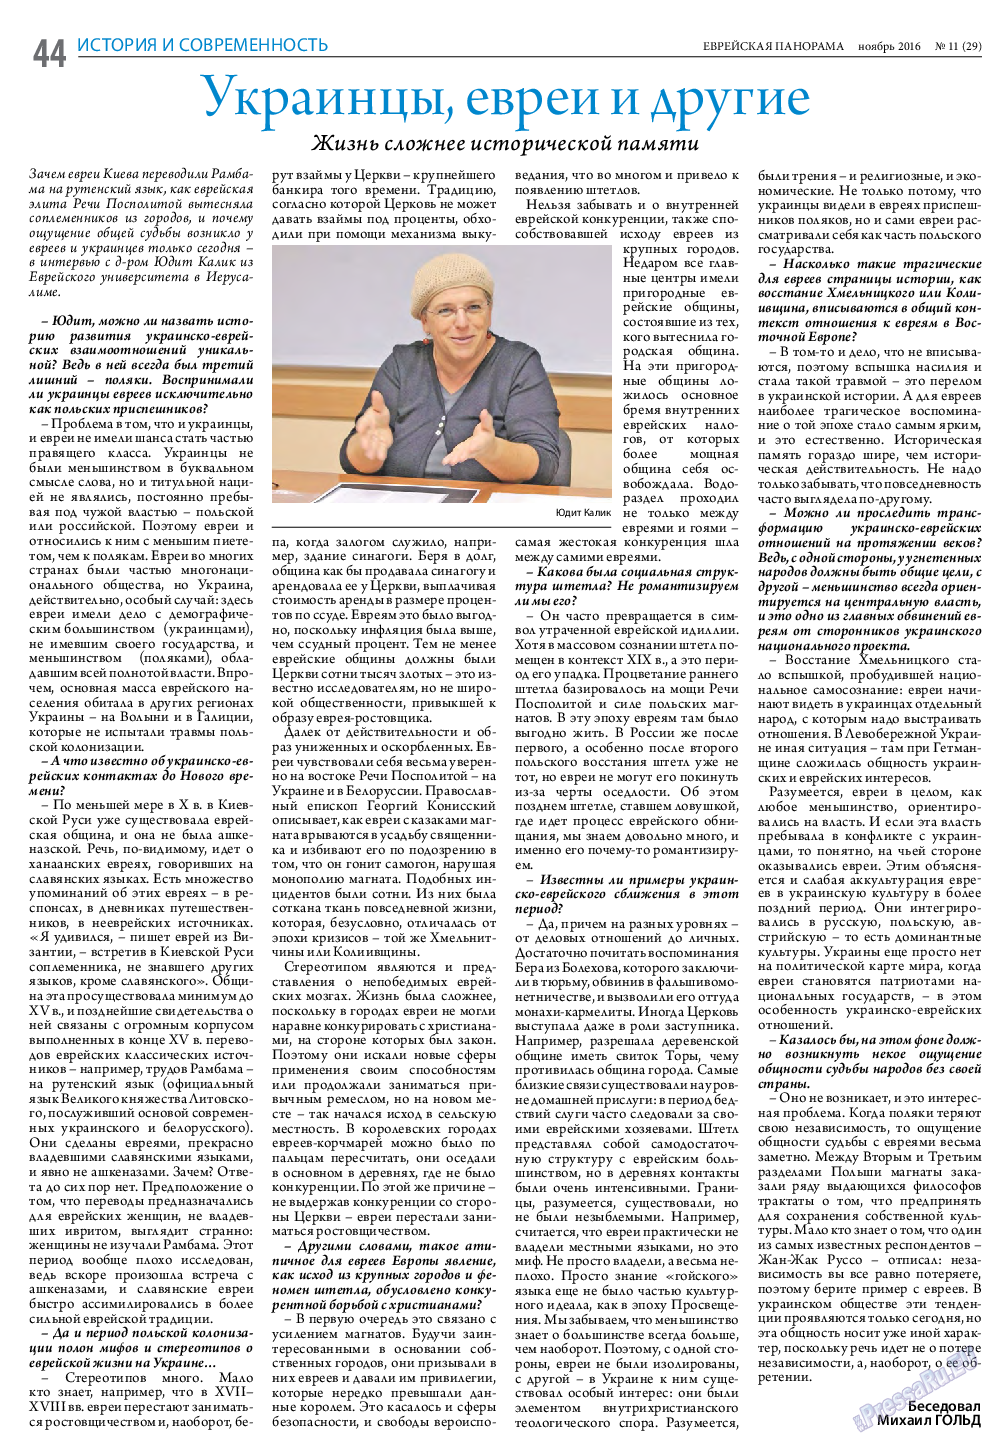 Еврейская панорама, газета. 2016 №11 стр.44